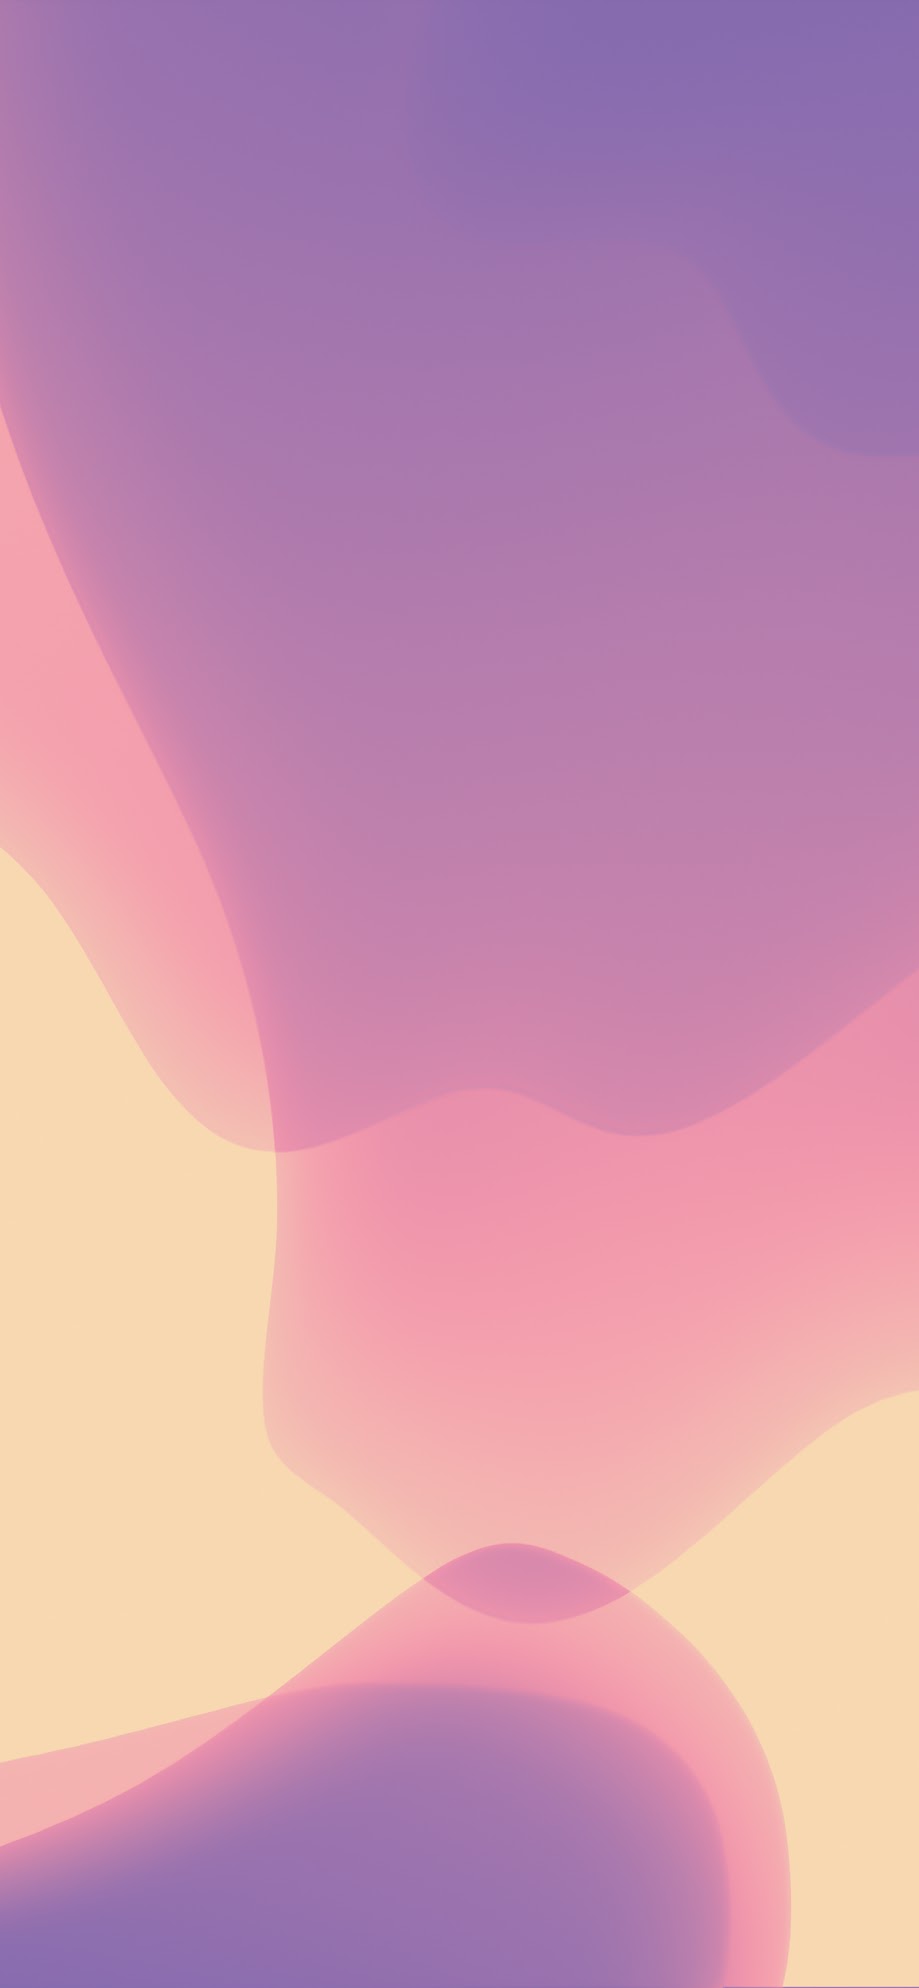 iOS-13-wallpapers-alternatives-idownloadblog-Hk3ToN-pink-purple-iphone